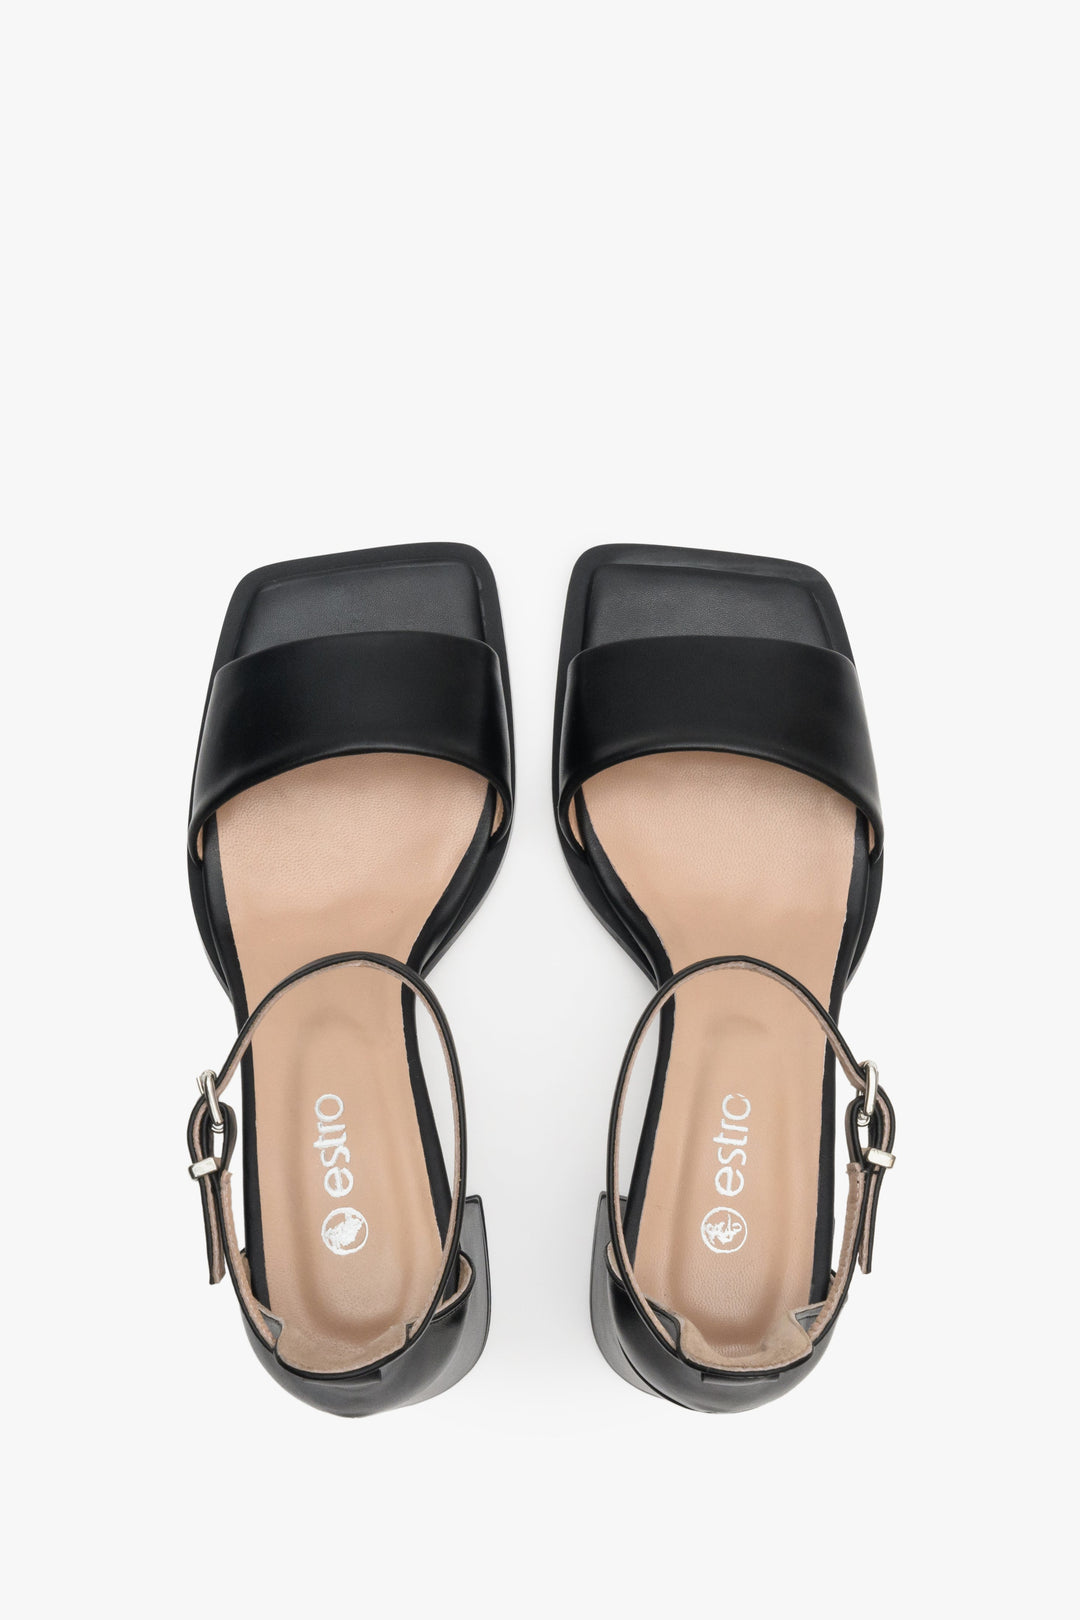 Women's black leather block-heeled sandals - top view presentation of Estro footwear.